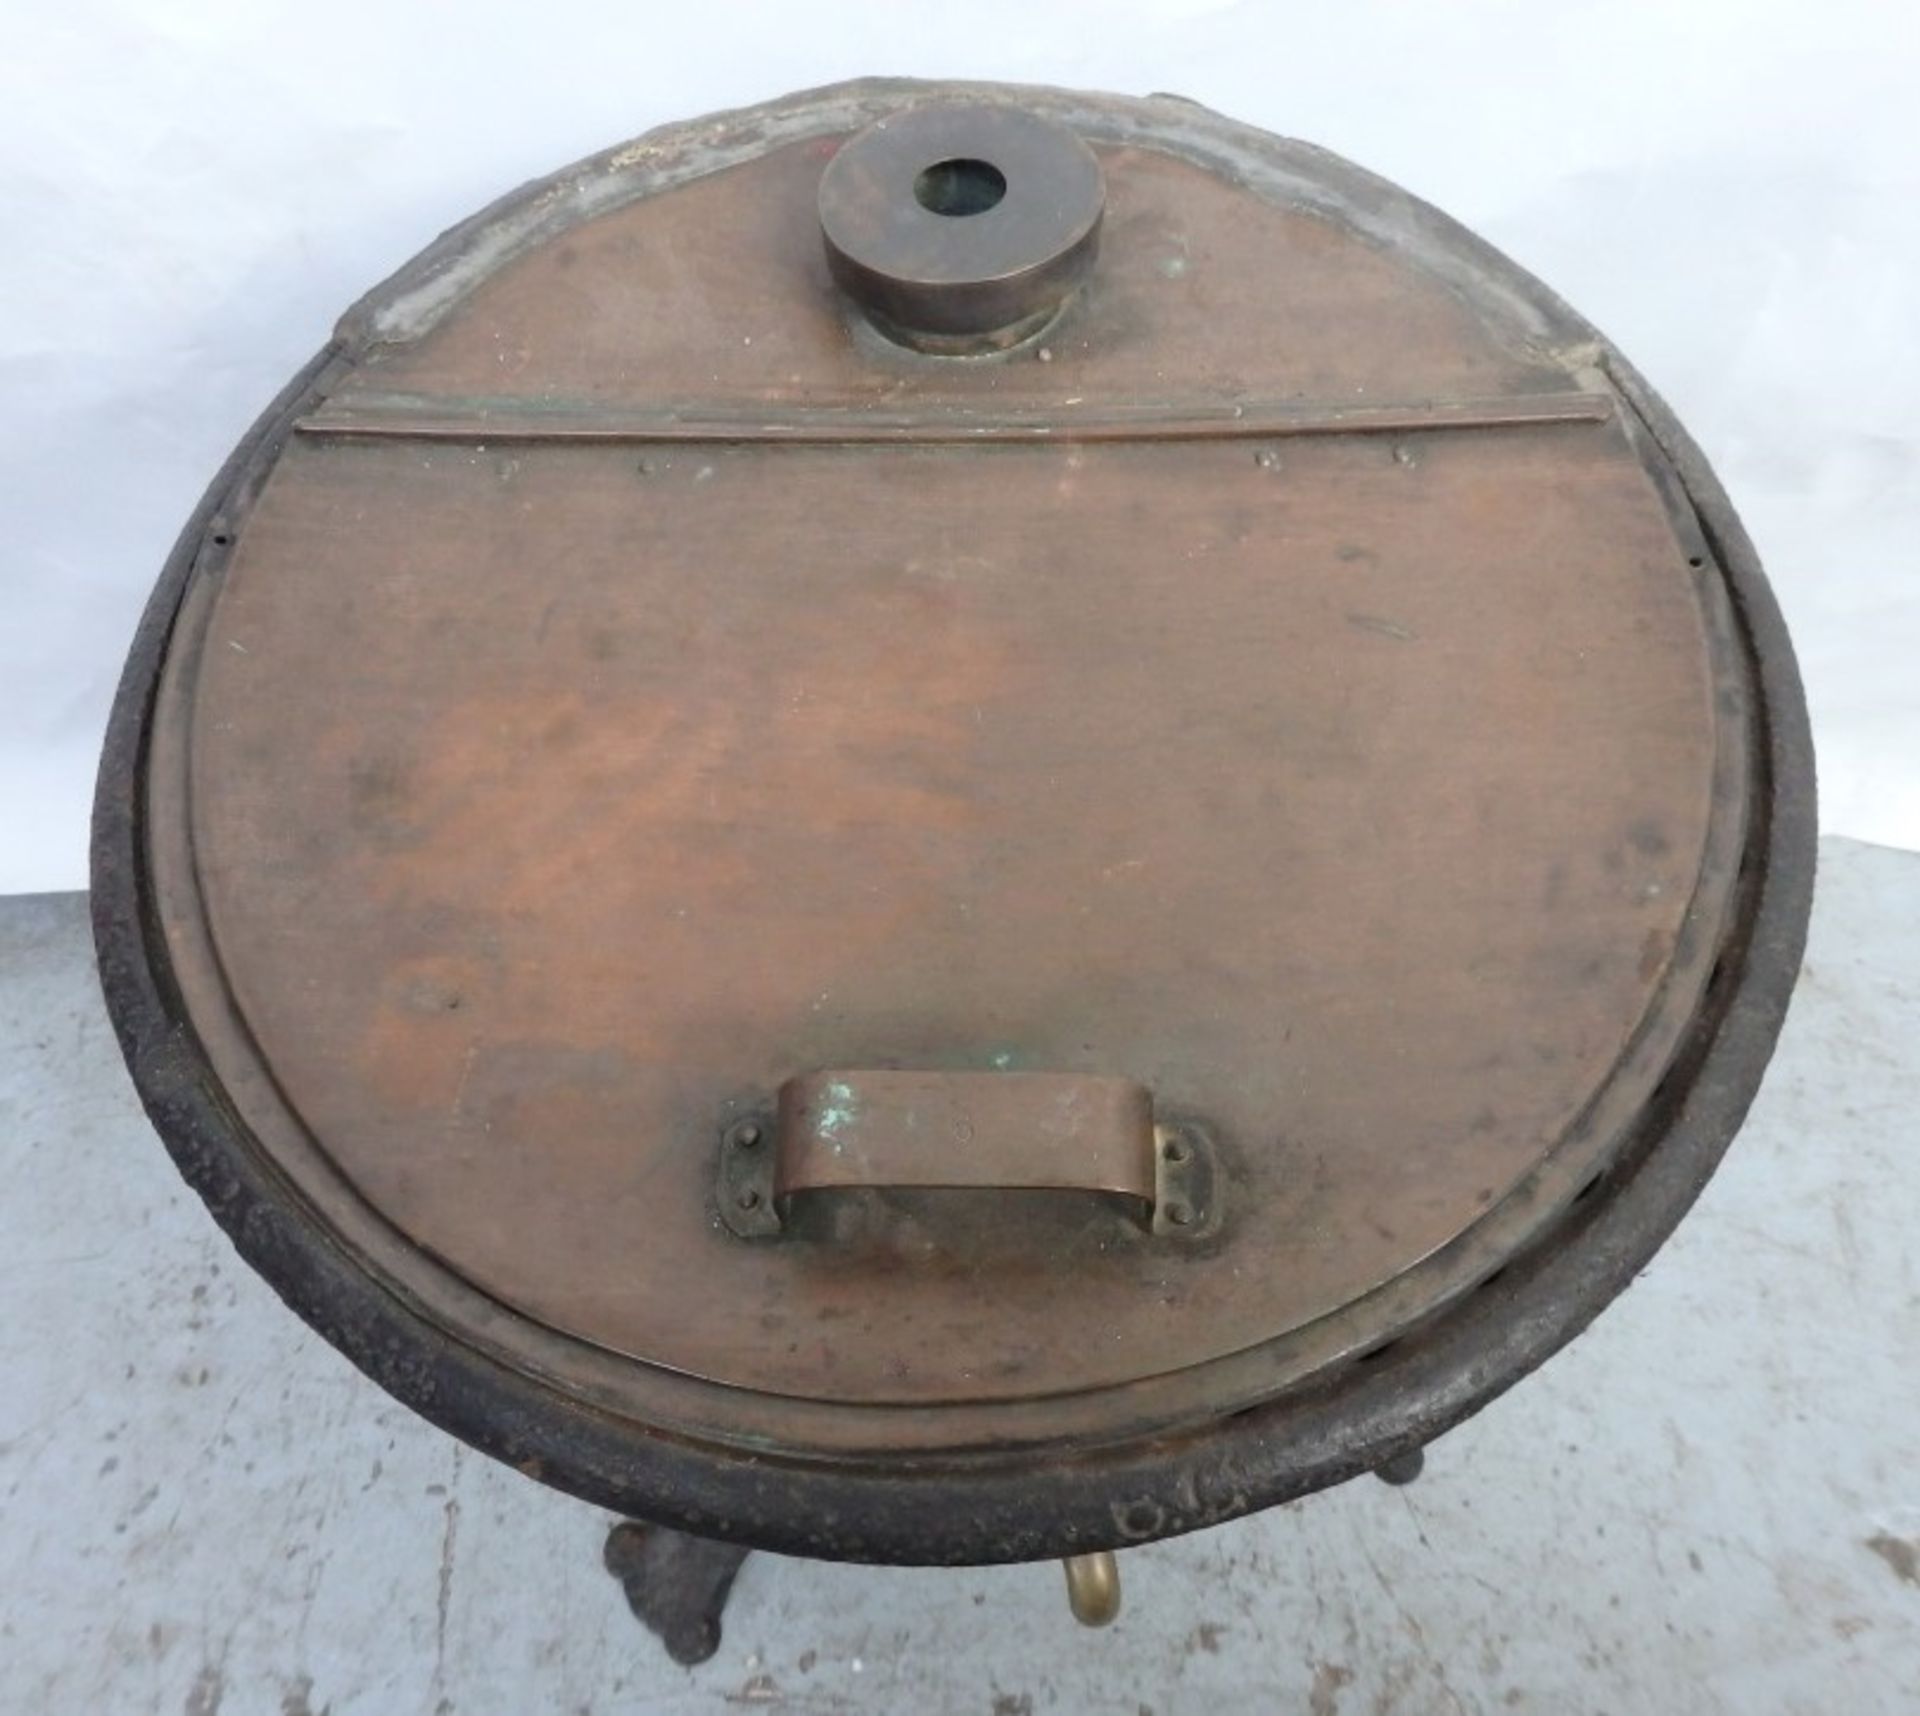 1 x Reclaimed Antique Cast Iron SAMOVAR / TEA URN - Dimensions: H70, Diameter 48cm - Ref VI004 - - Image 2 of 8